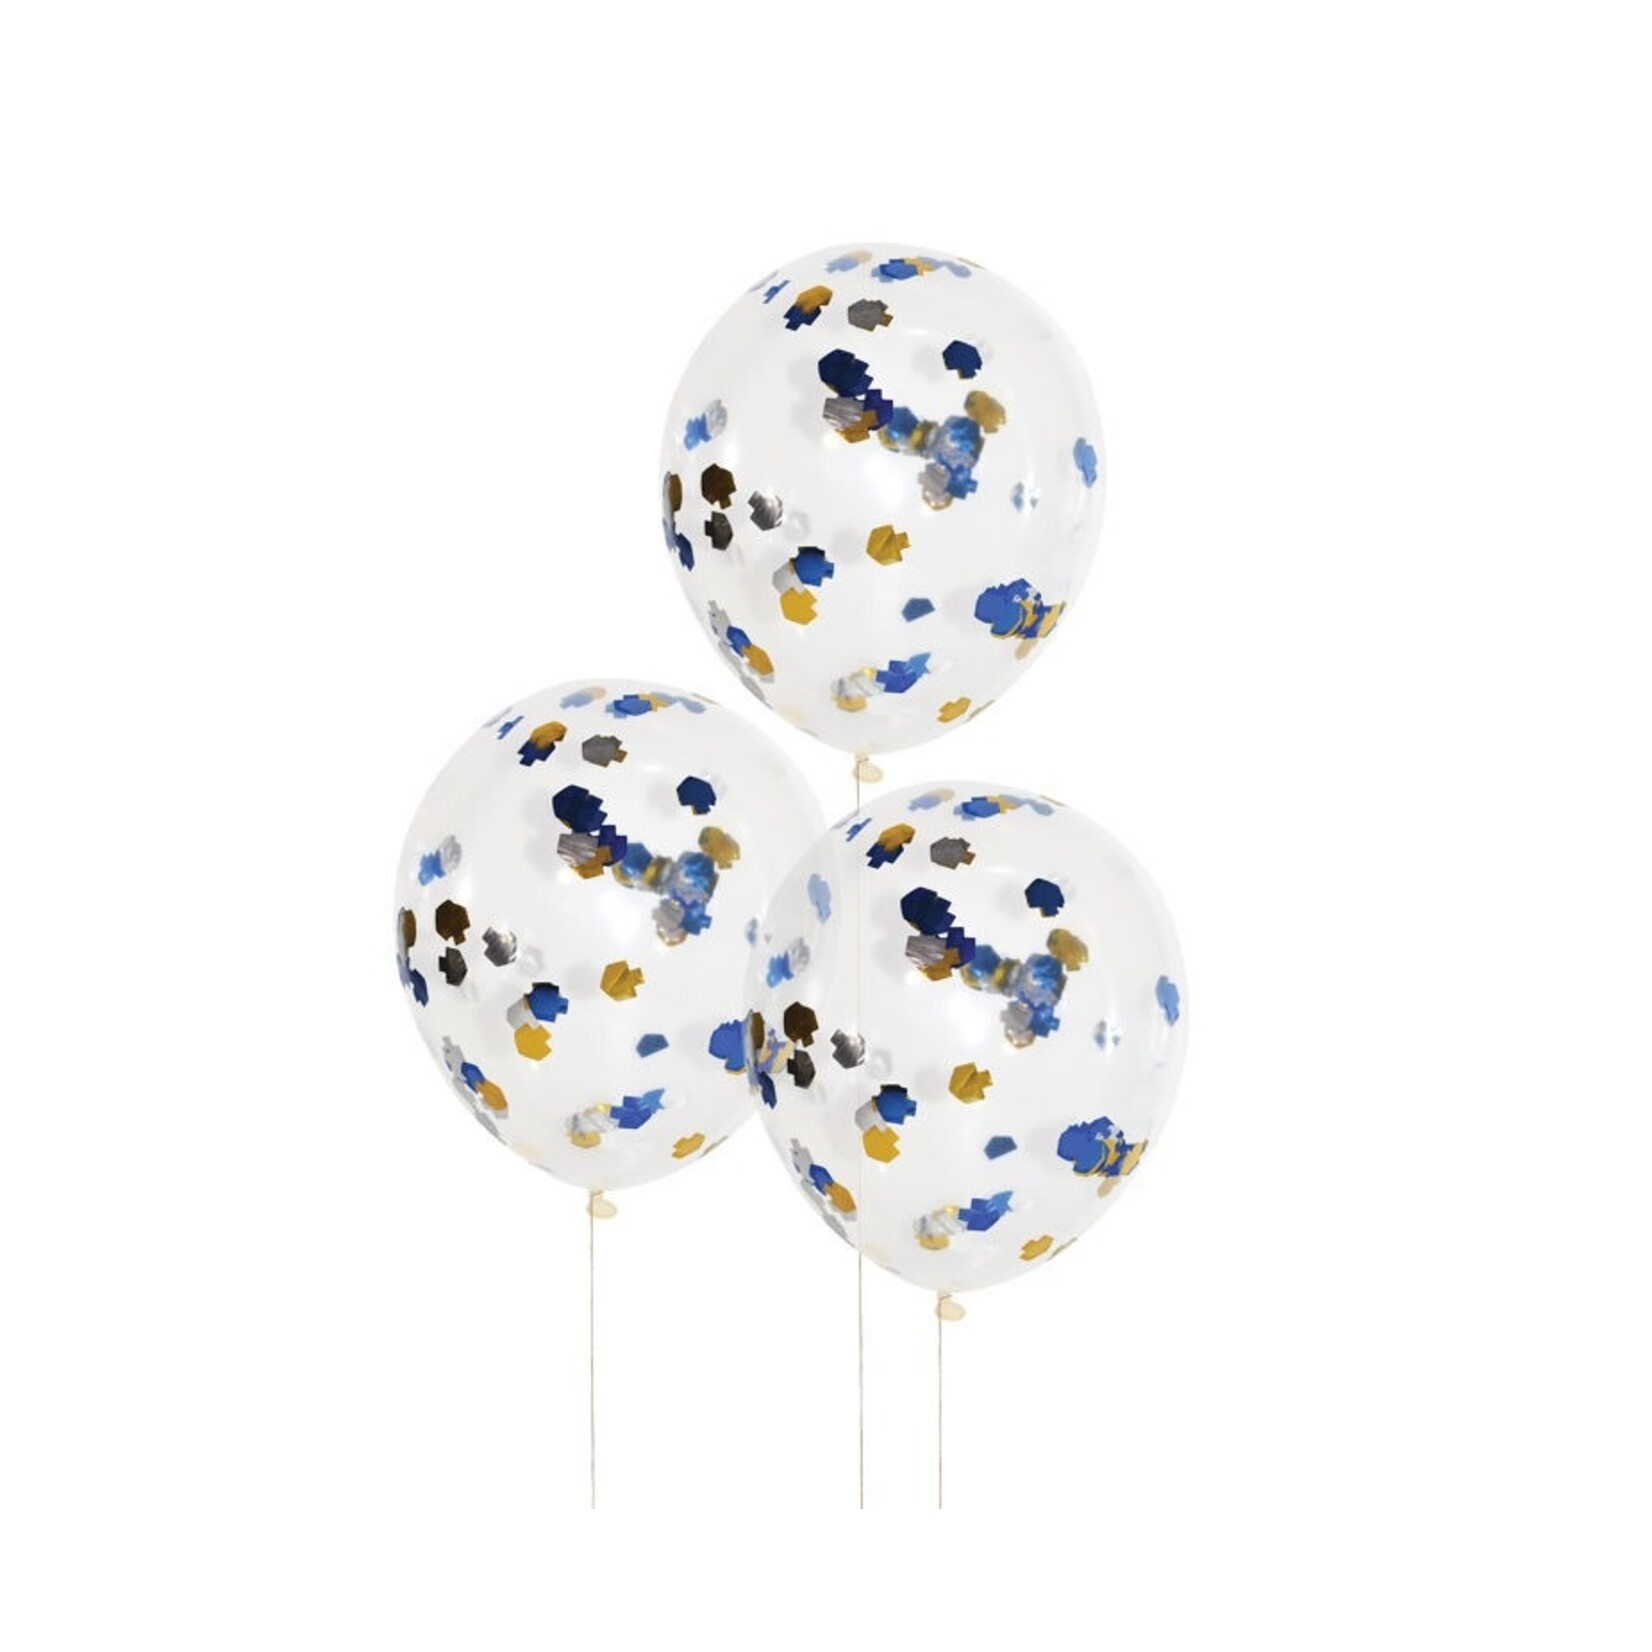 Chanukah Confetti Balloons, 5-Pack